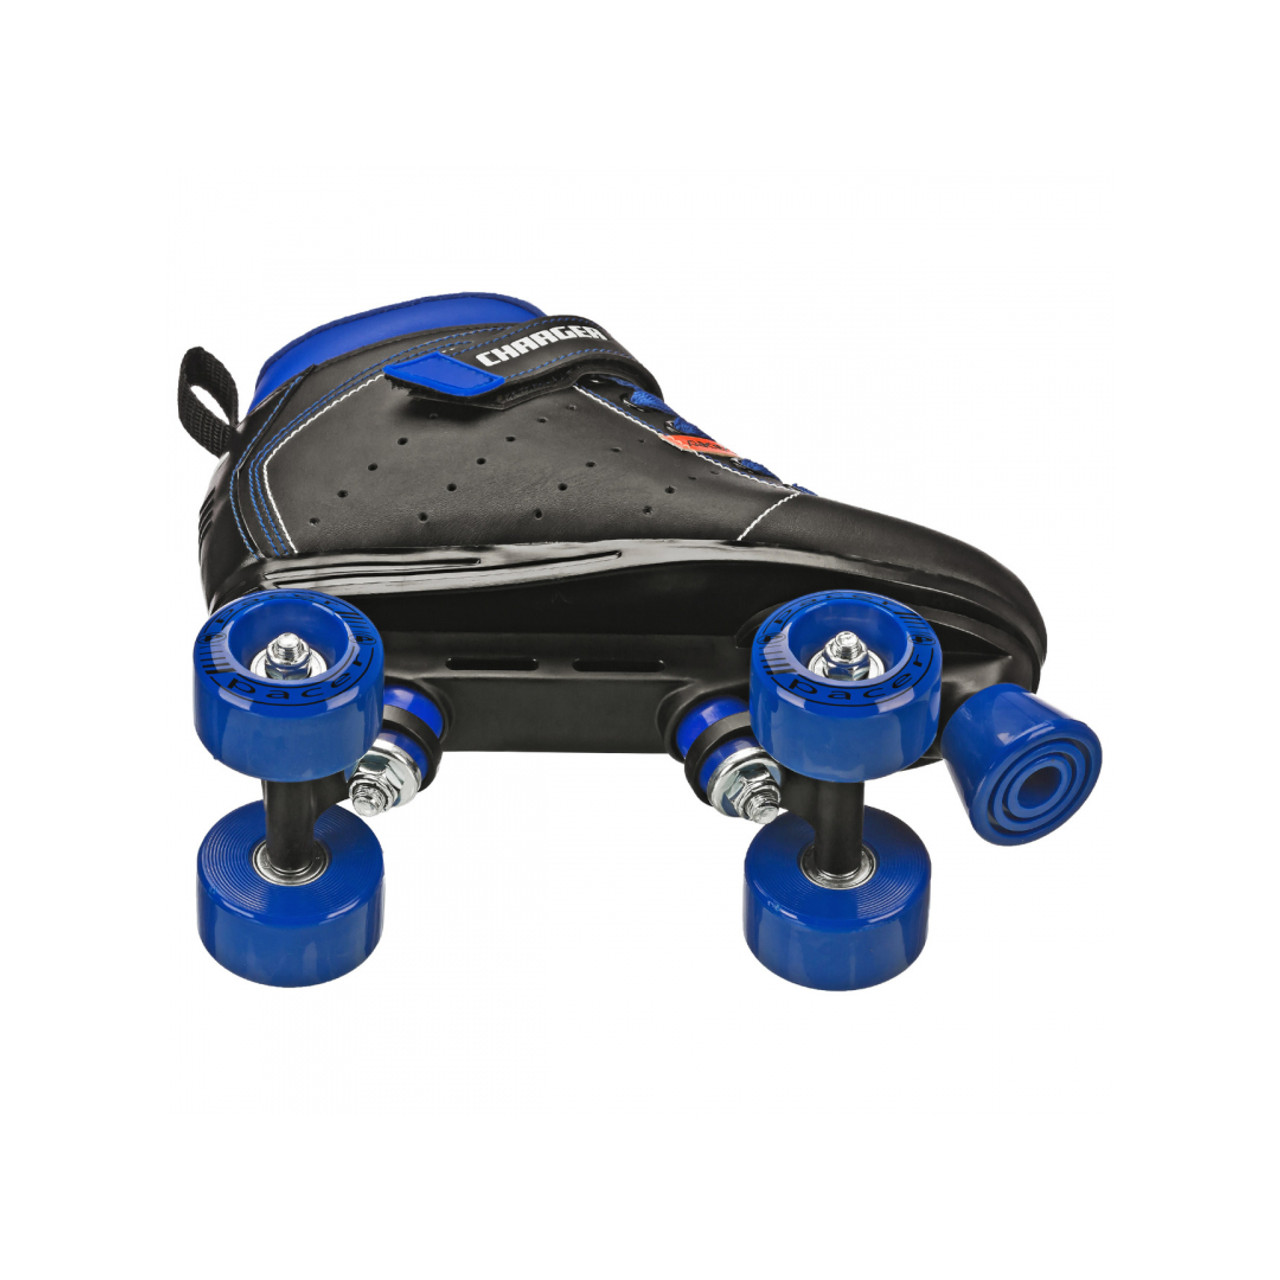 Pacer Charger 2.0 Roller Skates for Children | RollerSkateNation.com